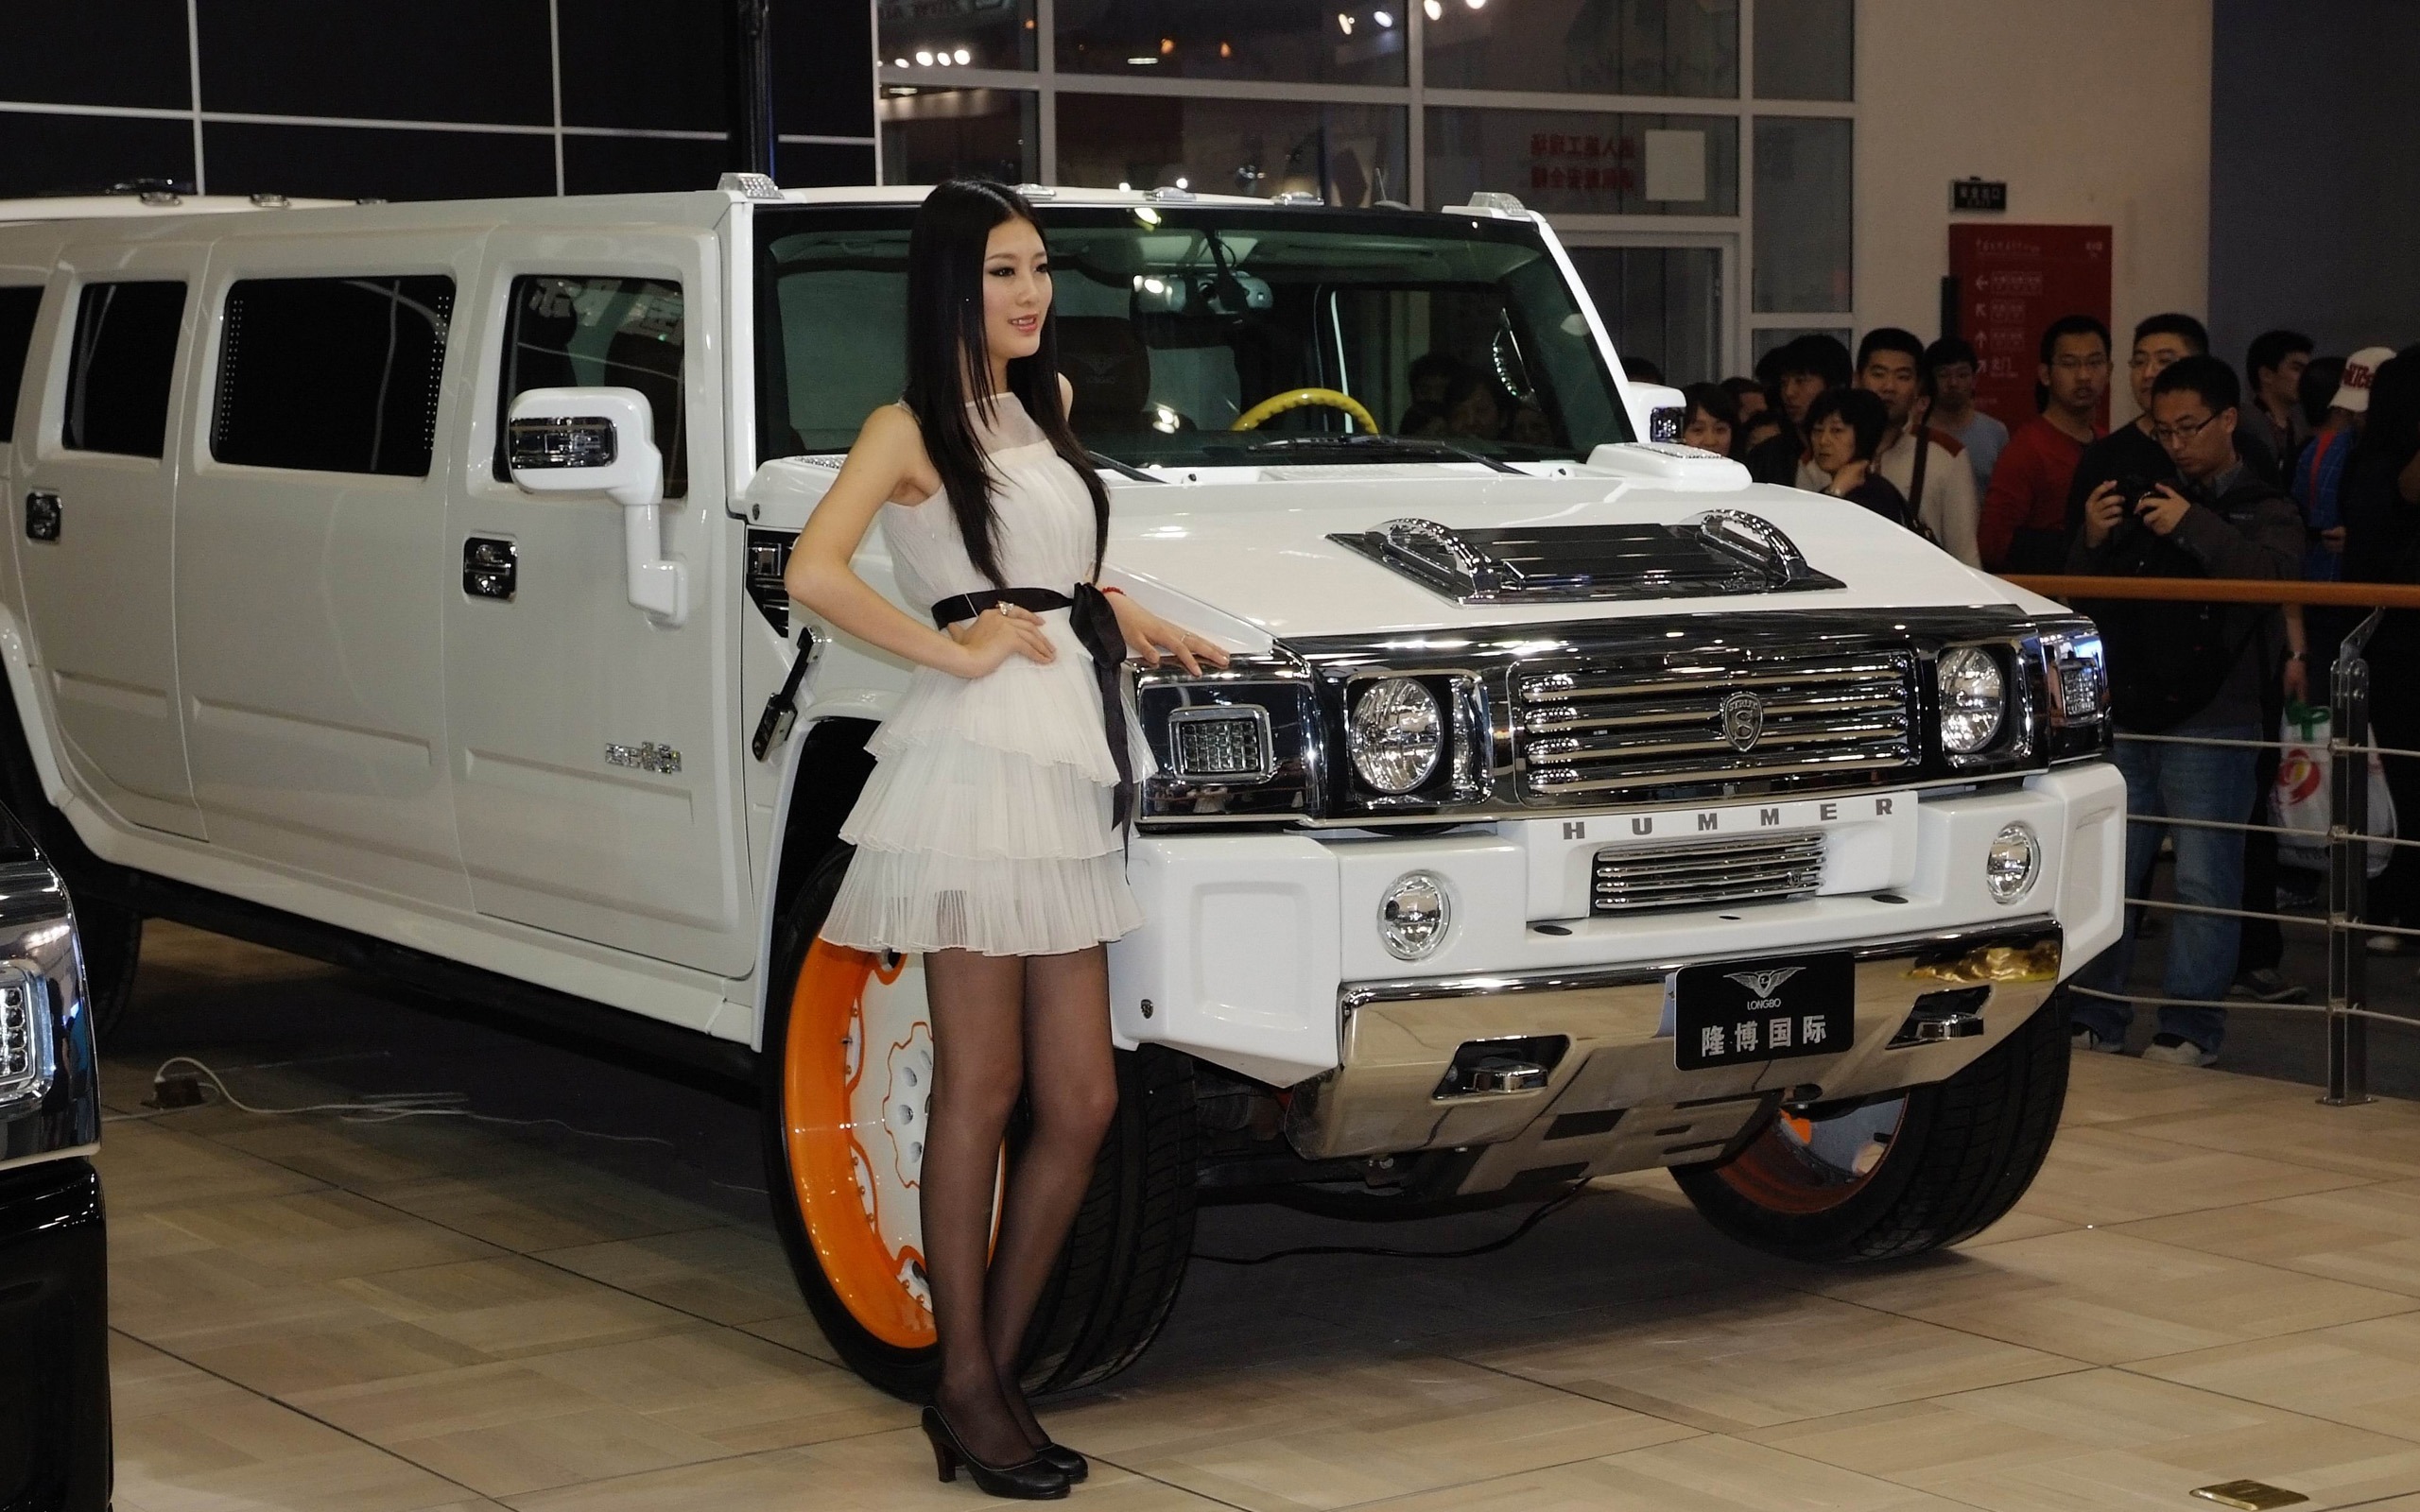 2010 Salón Internacional del Automóvil de Beijing Heung Che belleza (obras barras de refuerzo) #6 - 2560x1600